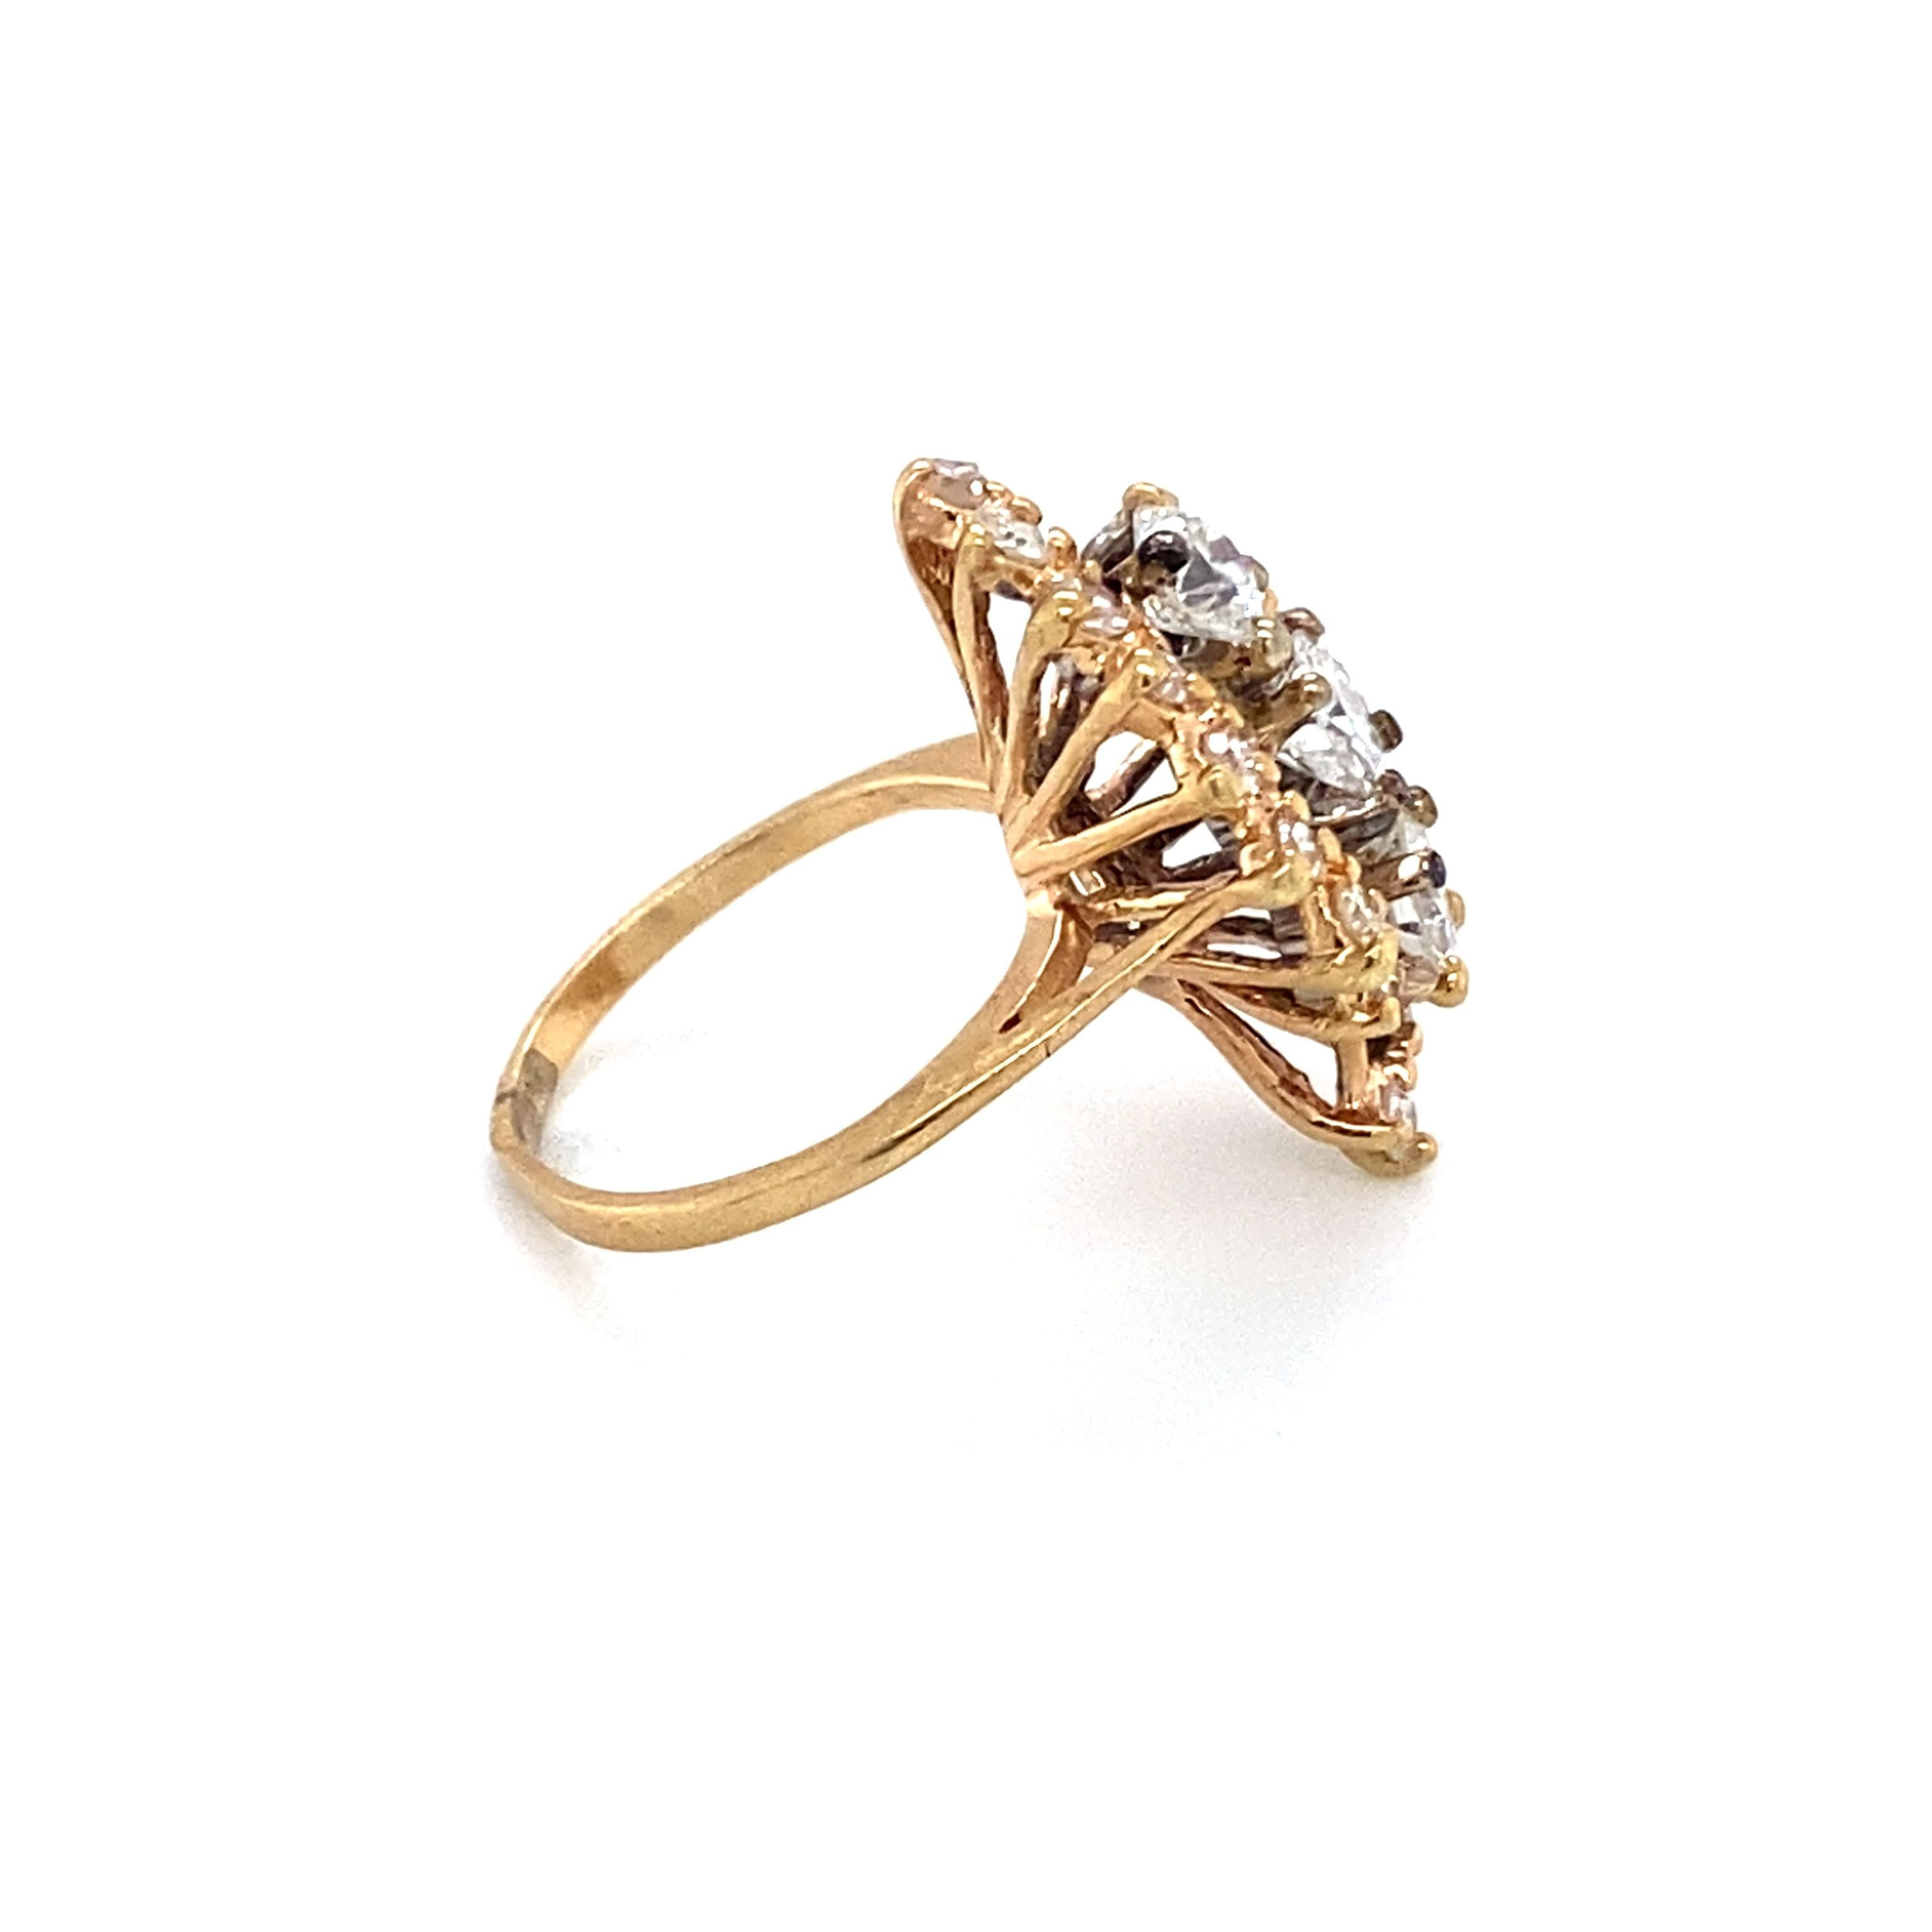 Women's Circa 1920s Art Deco 0.76 Carat Total Diamond Ring in 14 Karat Yellow Gold